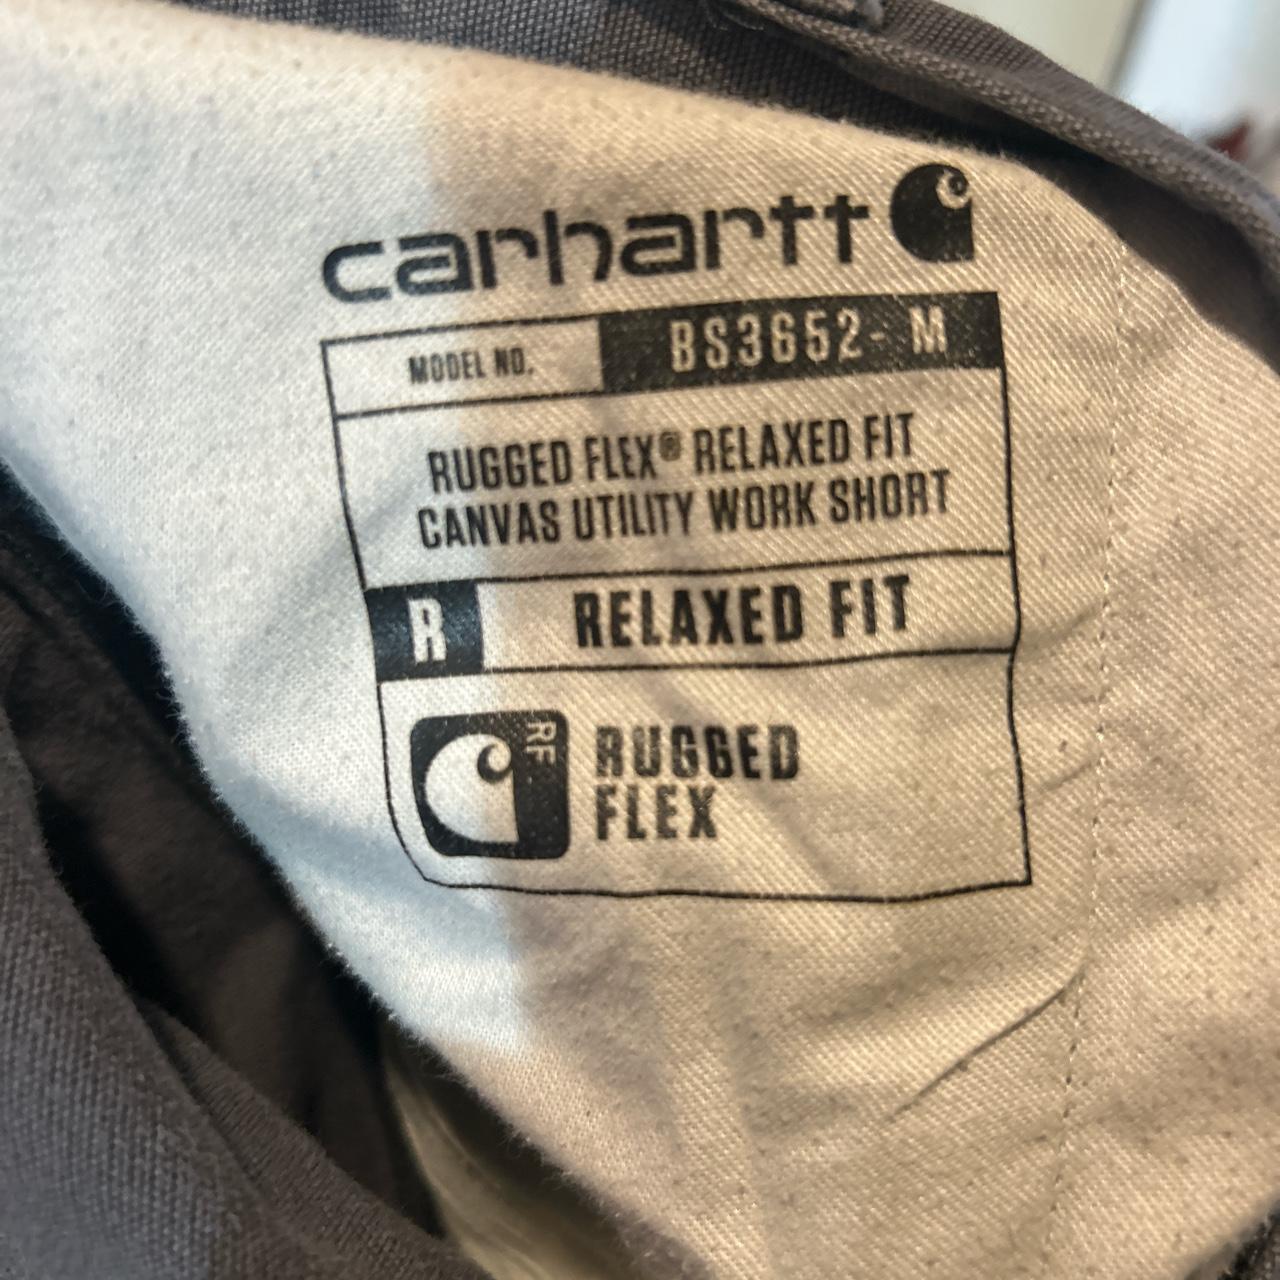 CARHARTT RUGGED FLEX RELAXED FIT SHORTS